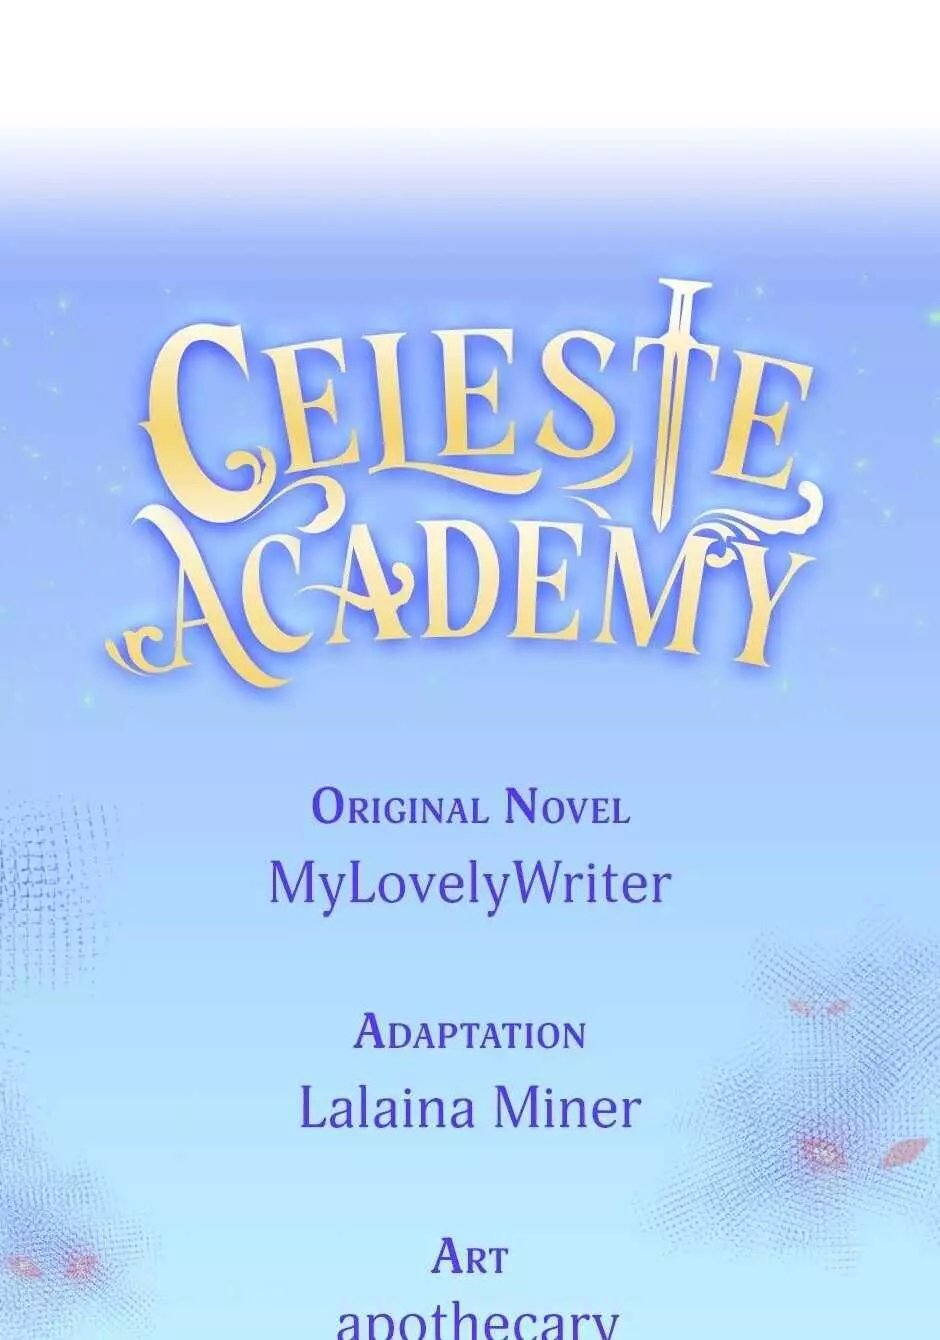 Celeste Academy - 4 page 52-9daceeae